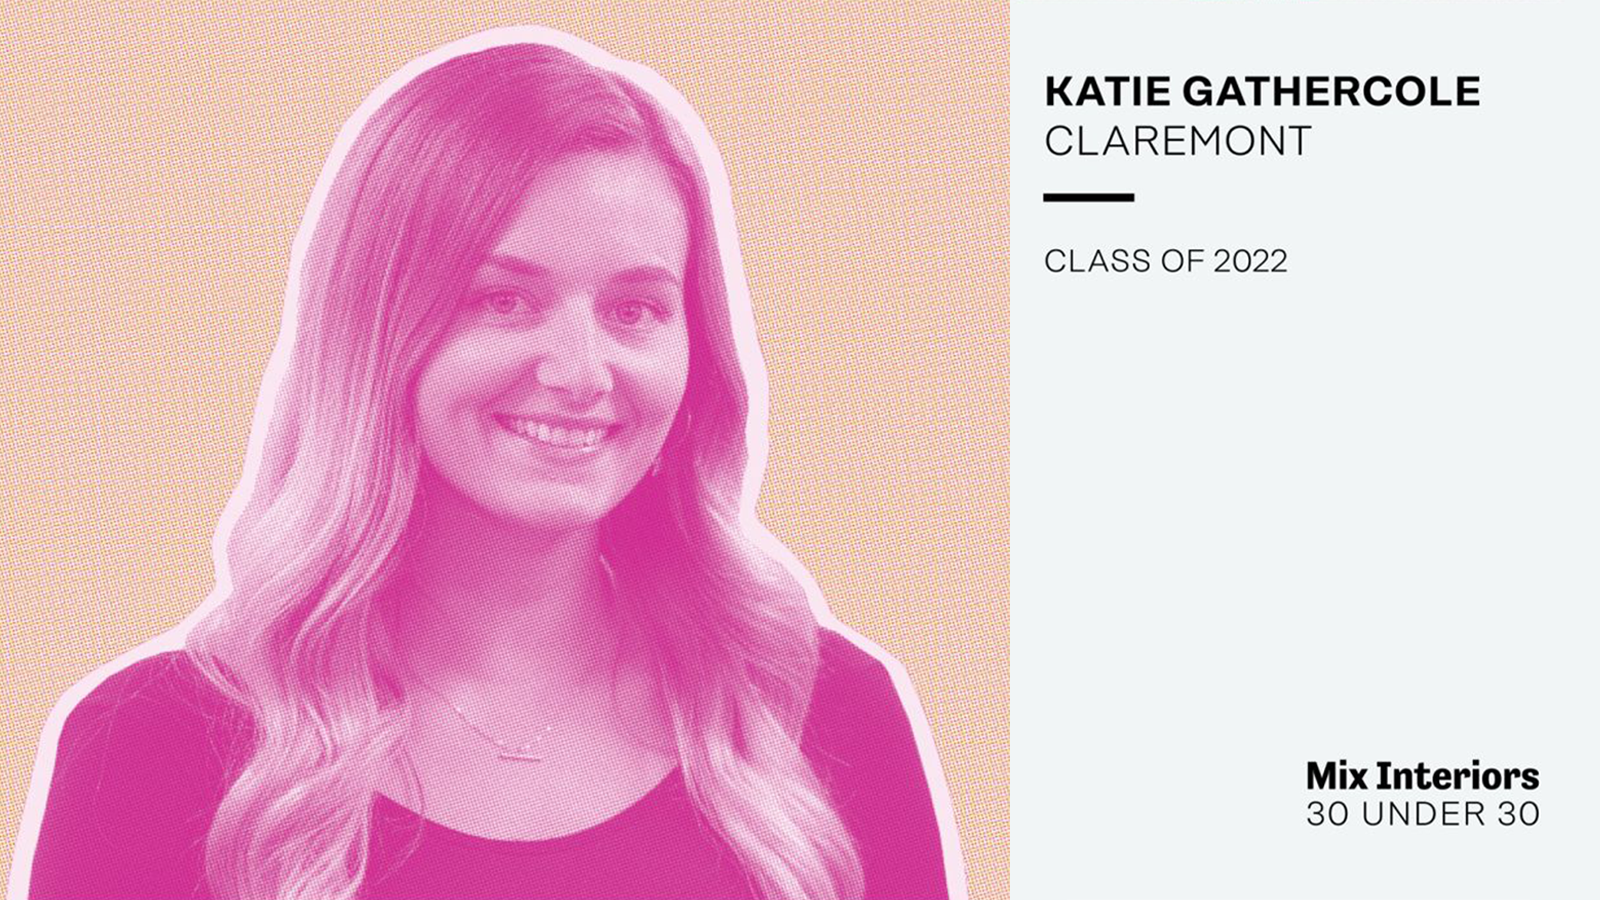 Katie Gathercole – Mix Interiors: 30 under 30